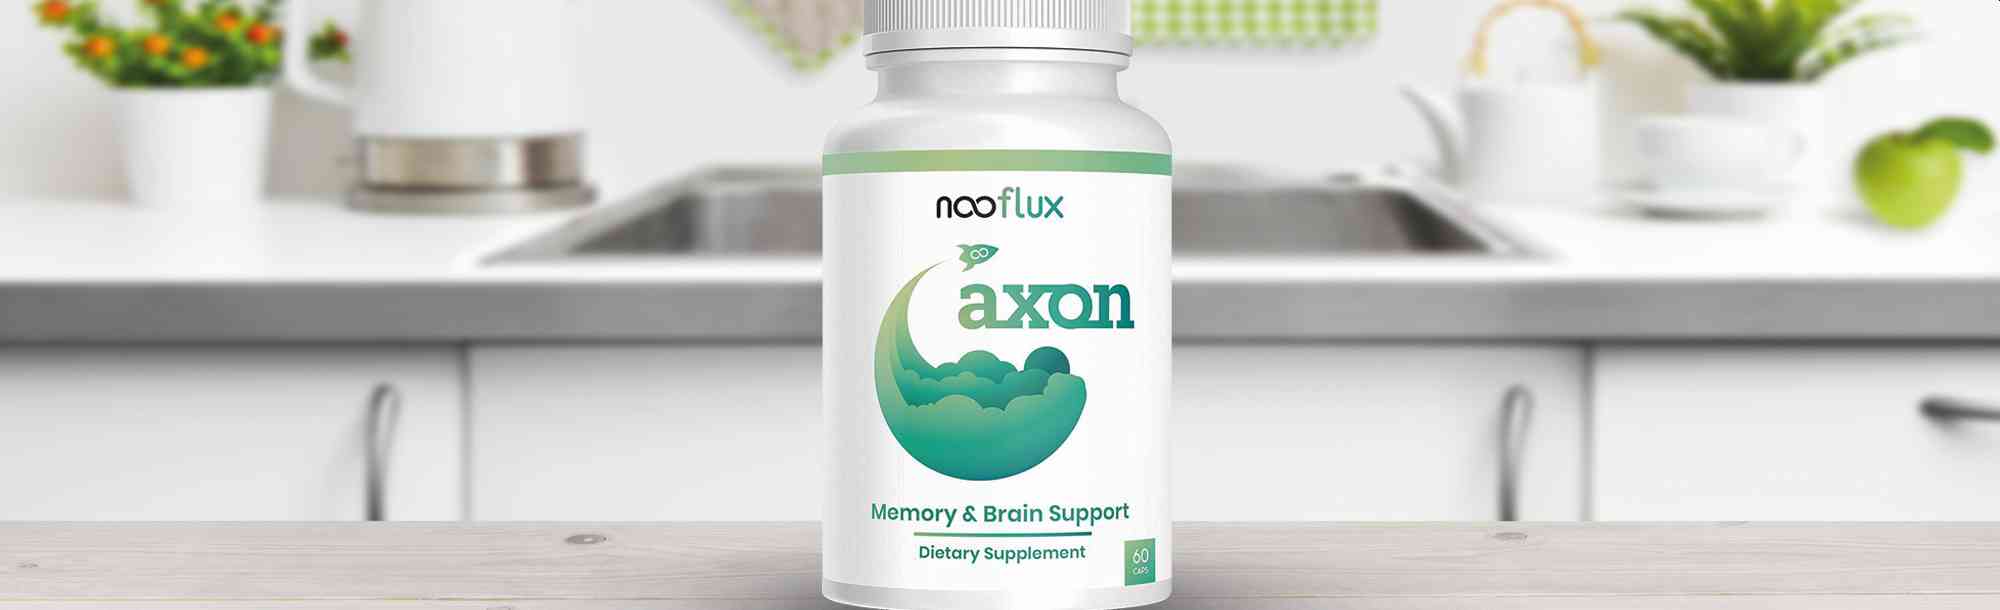 Nooflux Axon Review 2020